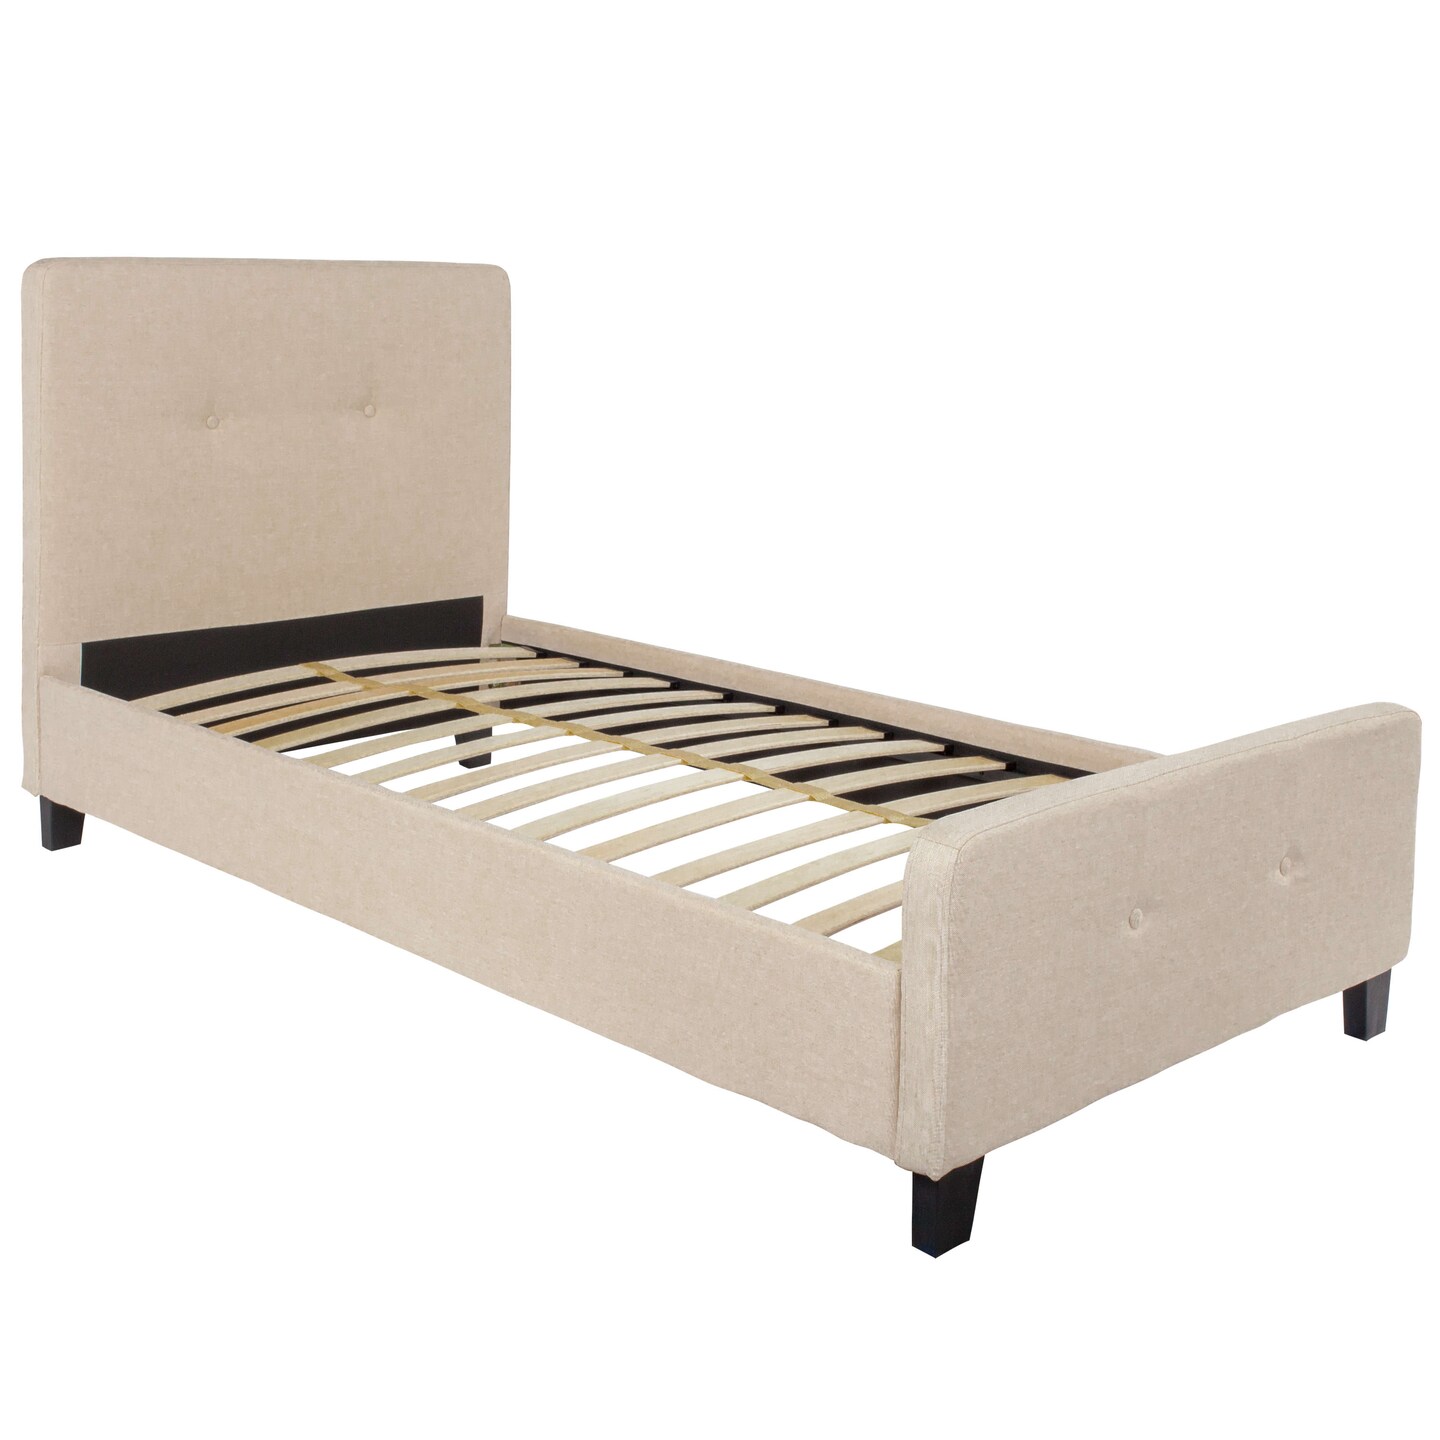 Merrick Lane Clarendon Platform Bed Contemporary Tufted Upholstered Platform Bed with Footboard